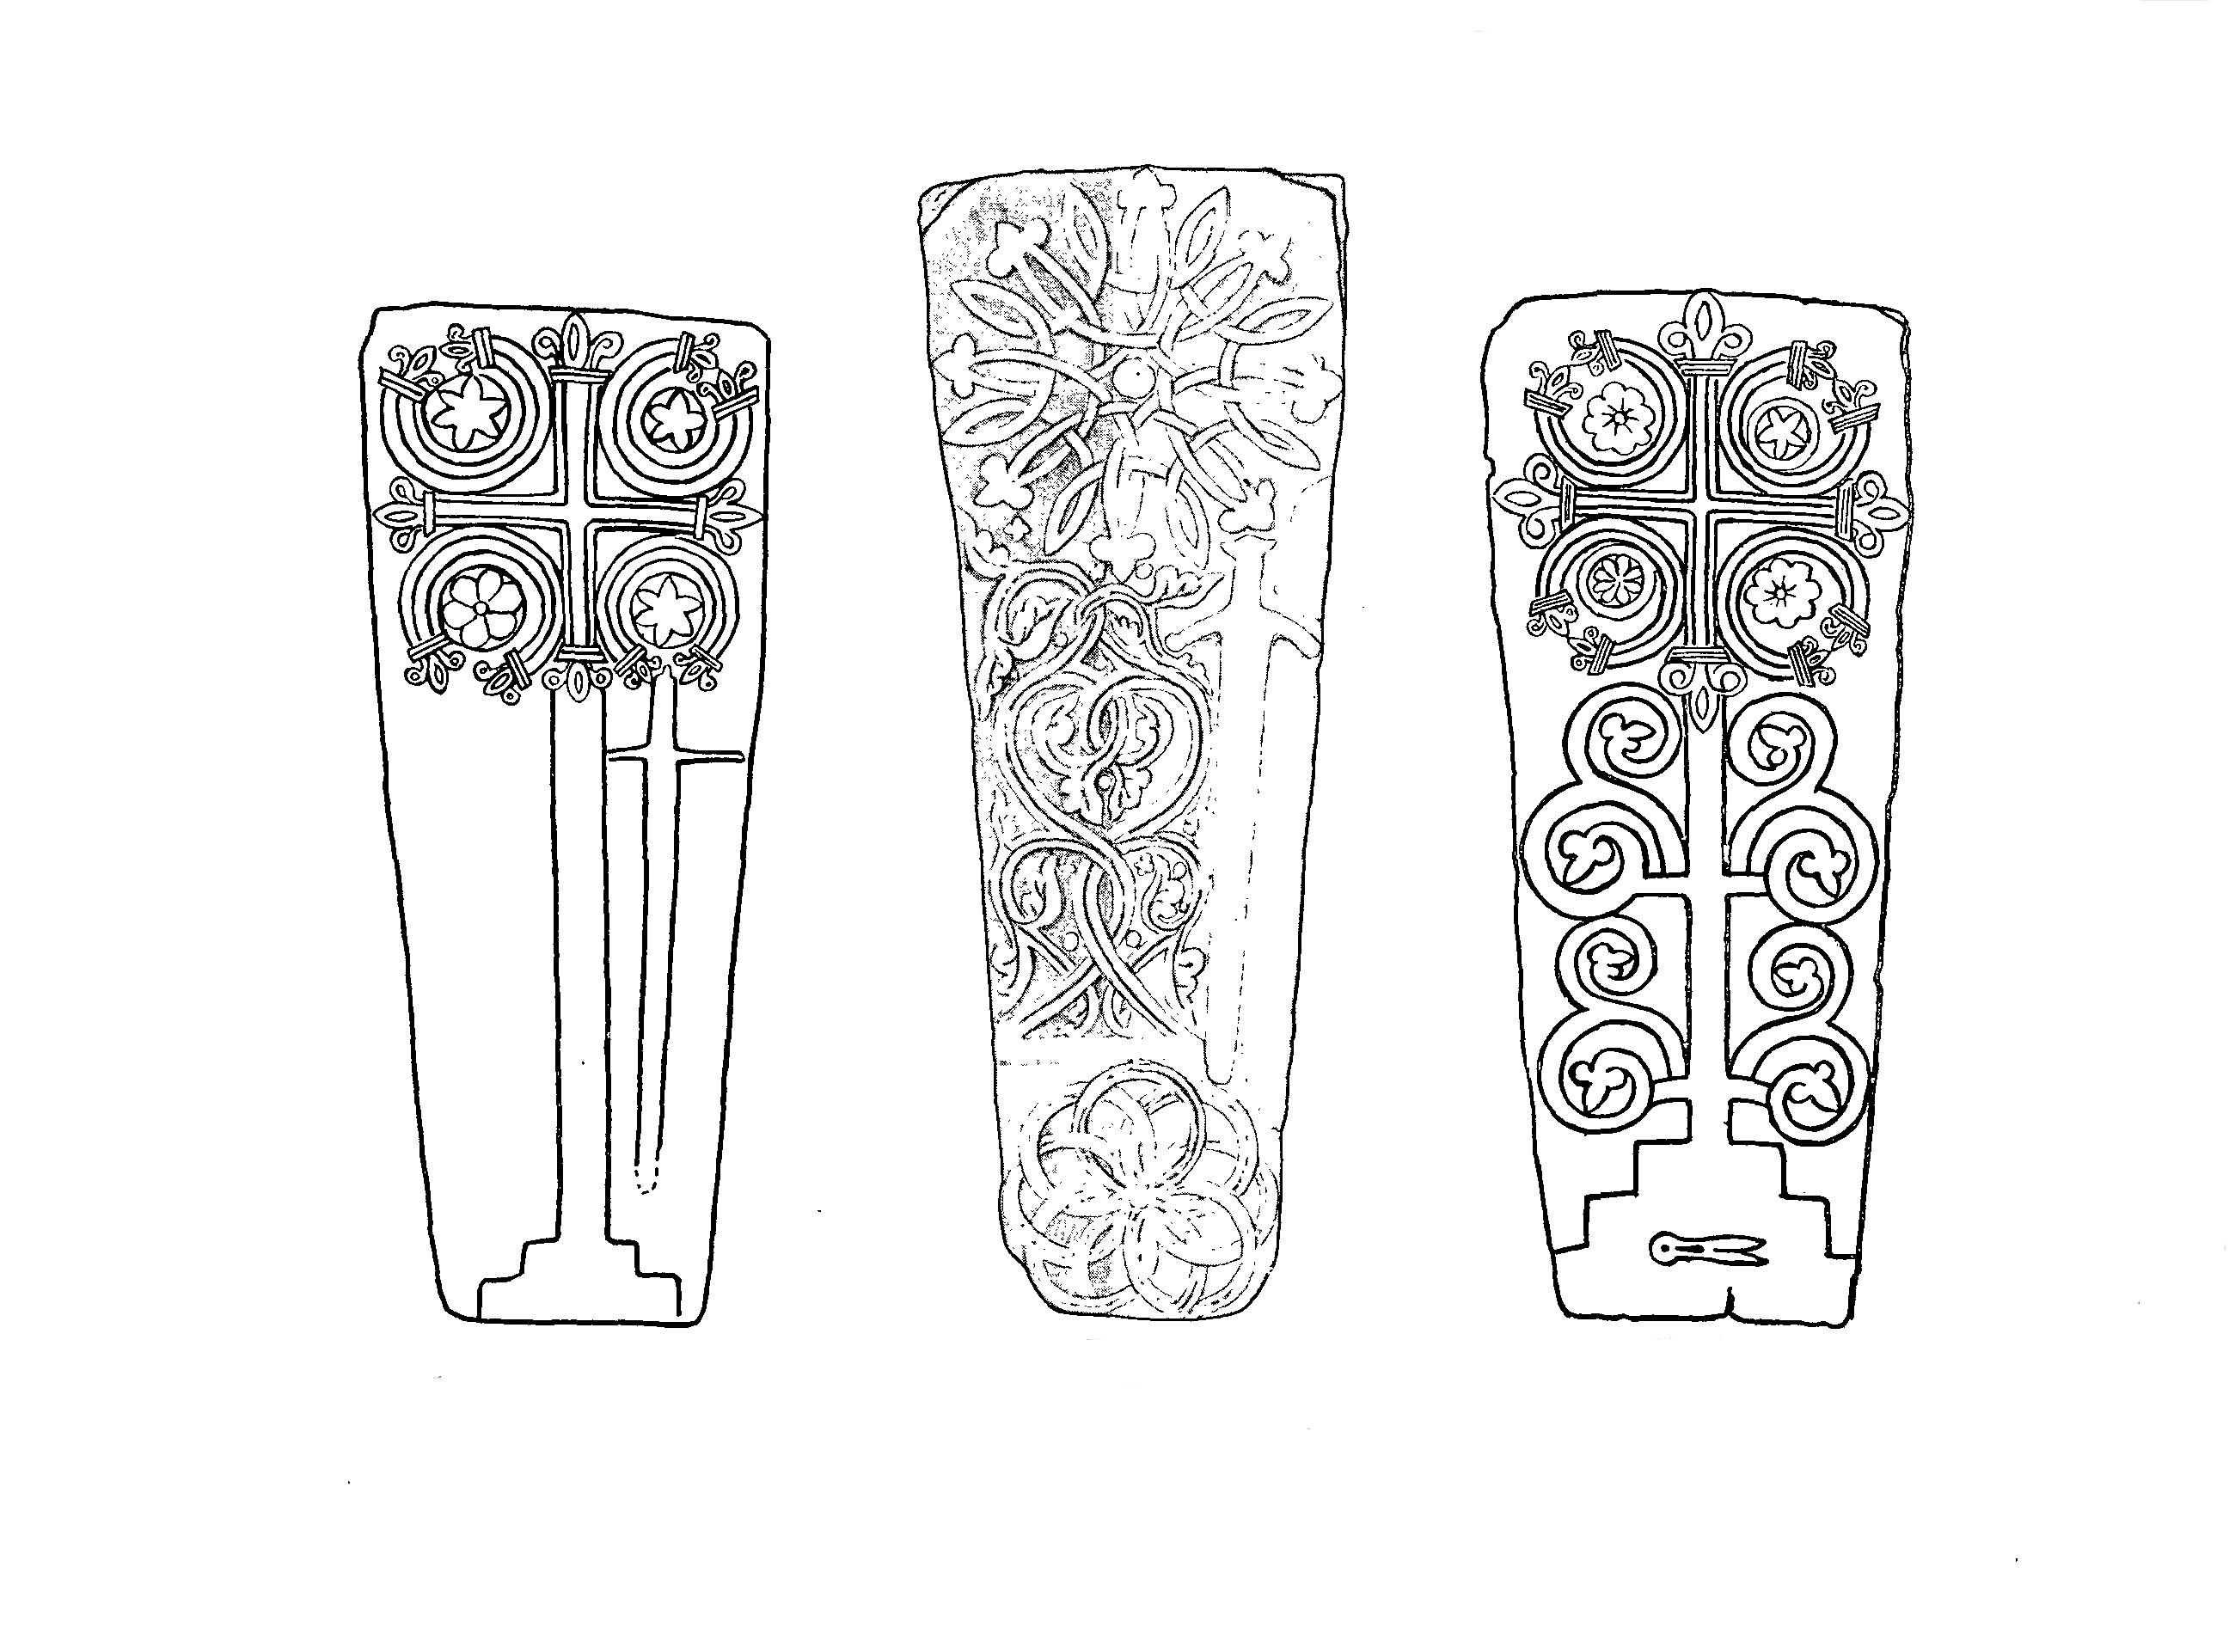 Drawings of the three cross-slabs at Kilmore, Abriachan.